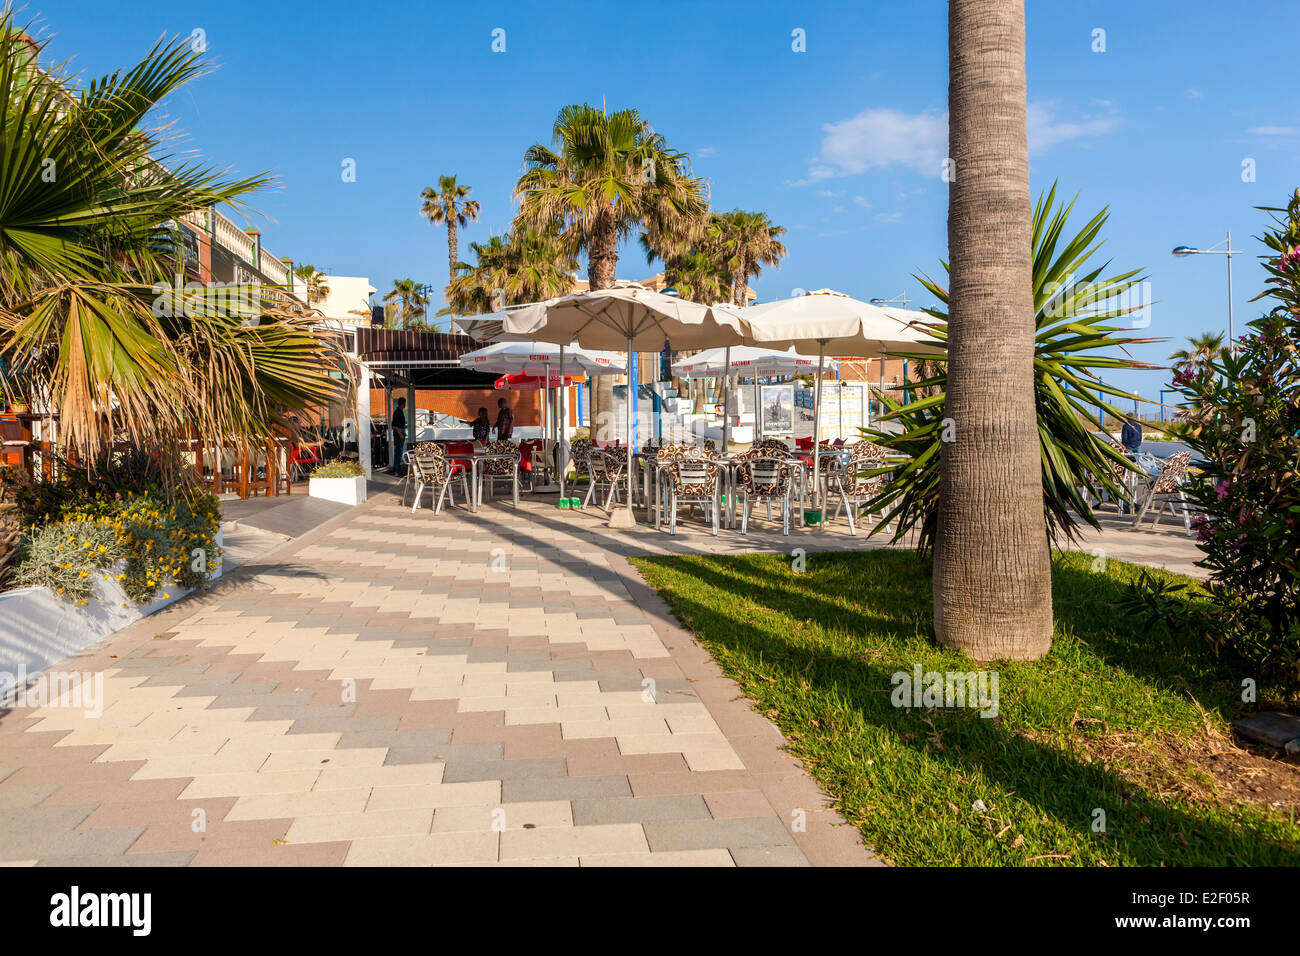 Playa Ferrara, Torrox, Costa del Sol, Malaga province, Andalusia, Spain, Europe. Stock Photo